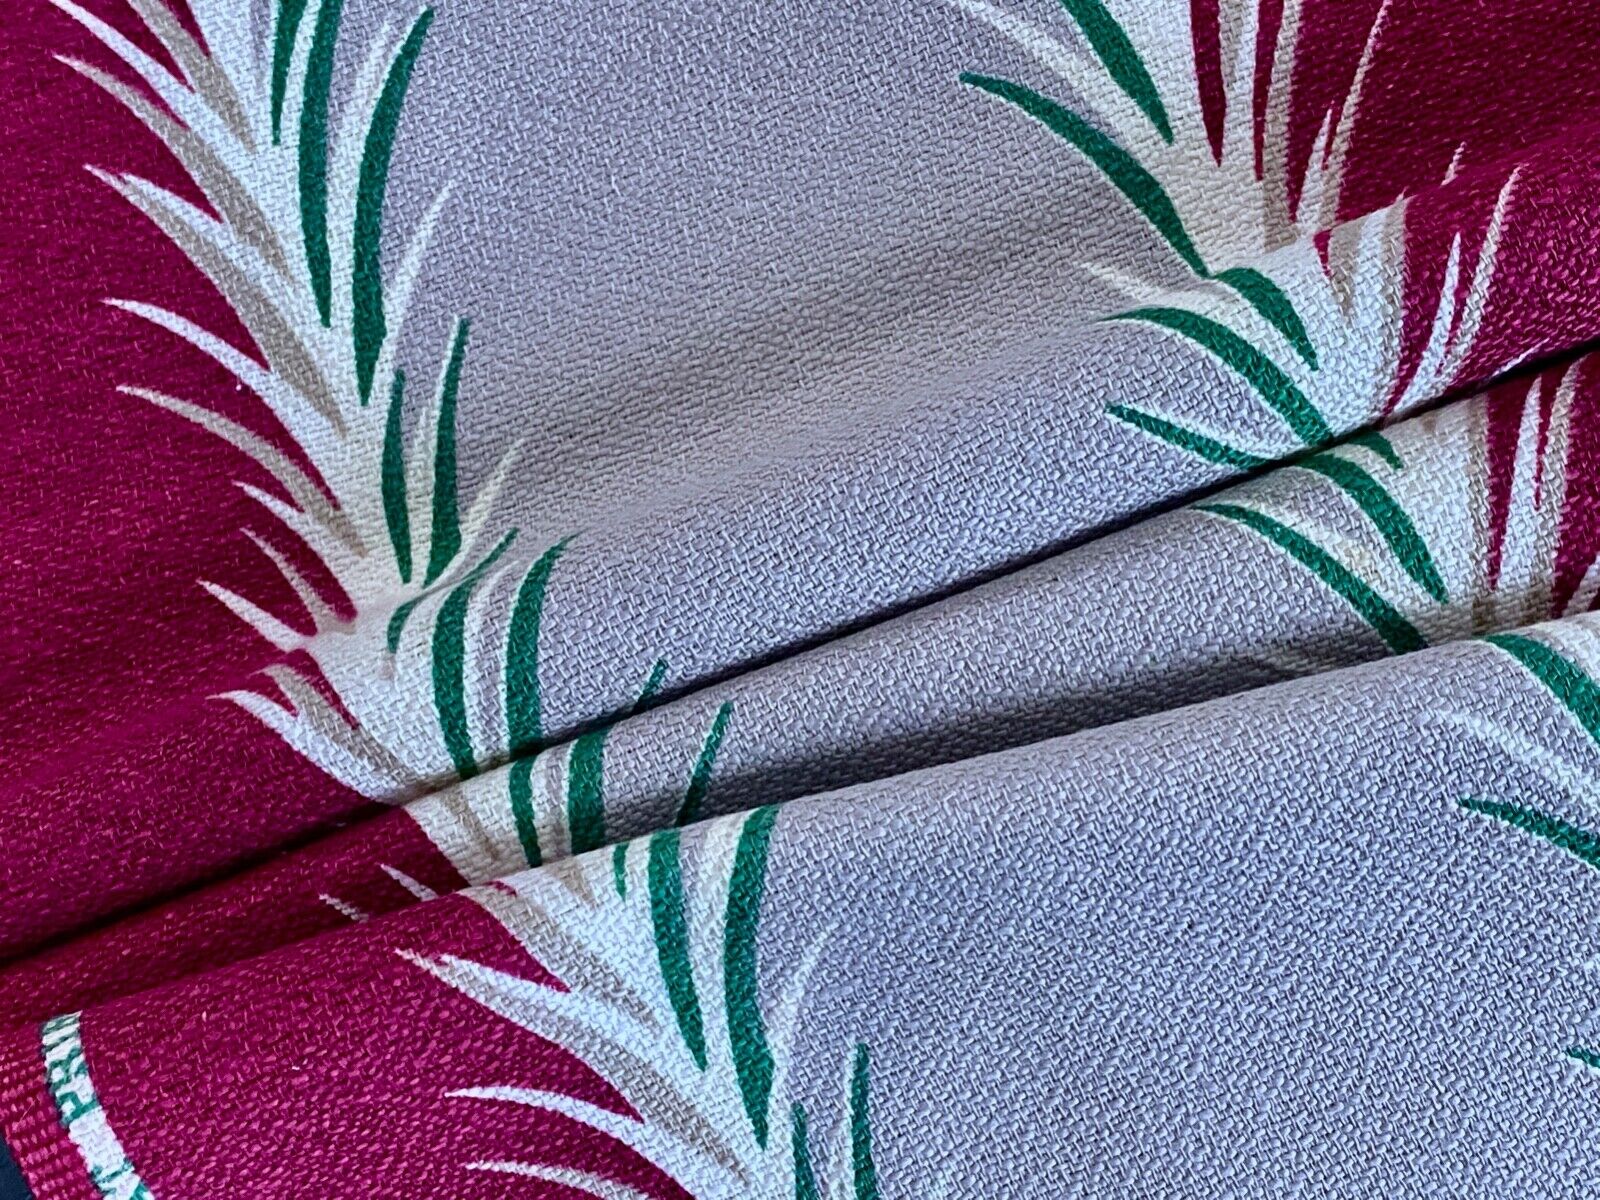 Miami 30's Art Deco Raspberry Teal Lime Tropical Stripe Barkcloth Vintage Fabric